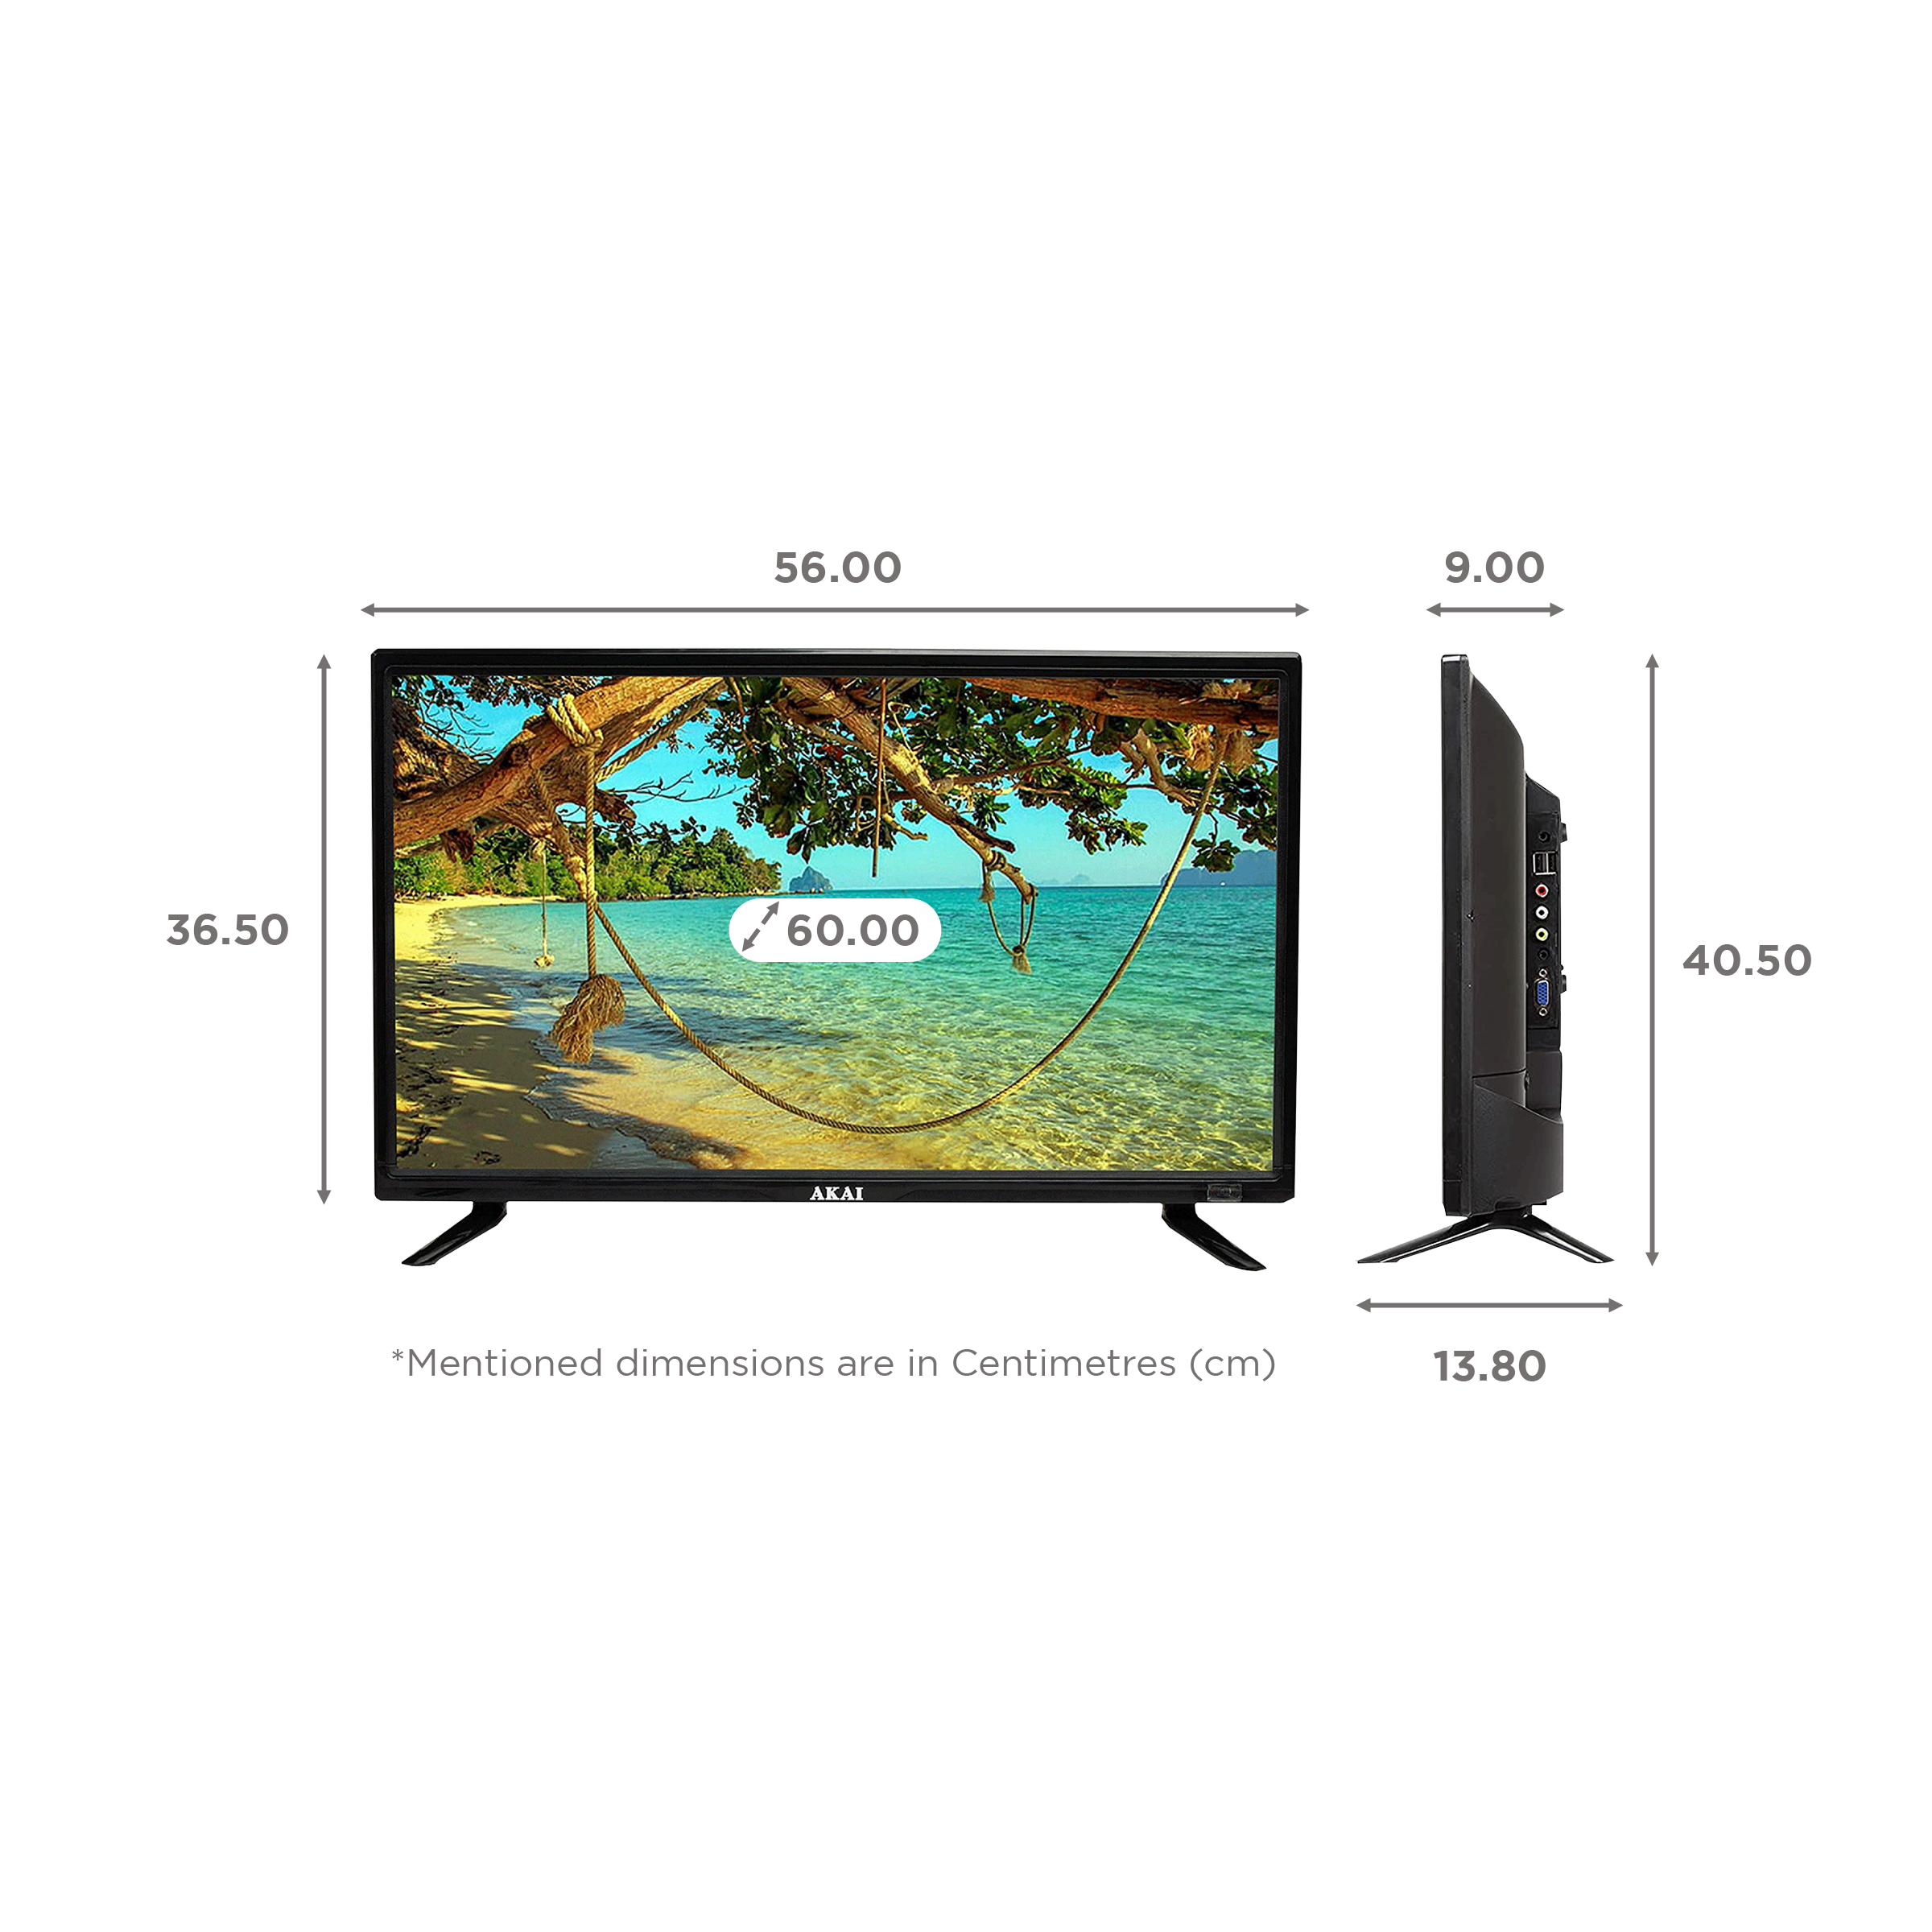 Akai 60 cm (24 inch) HD Ready LED TV with A+ Grade Panel (2020 model)_2